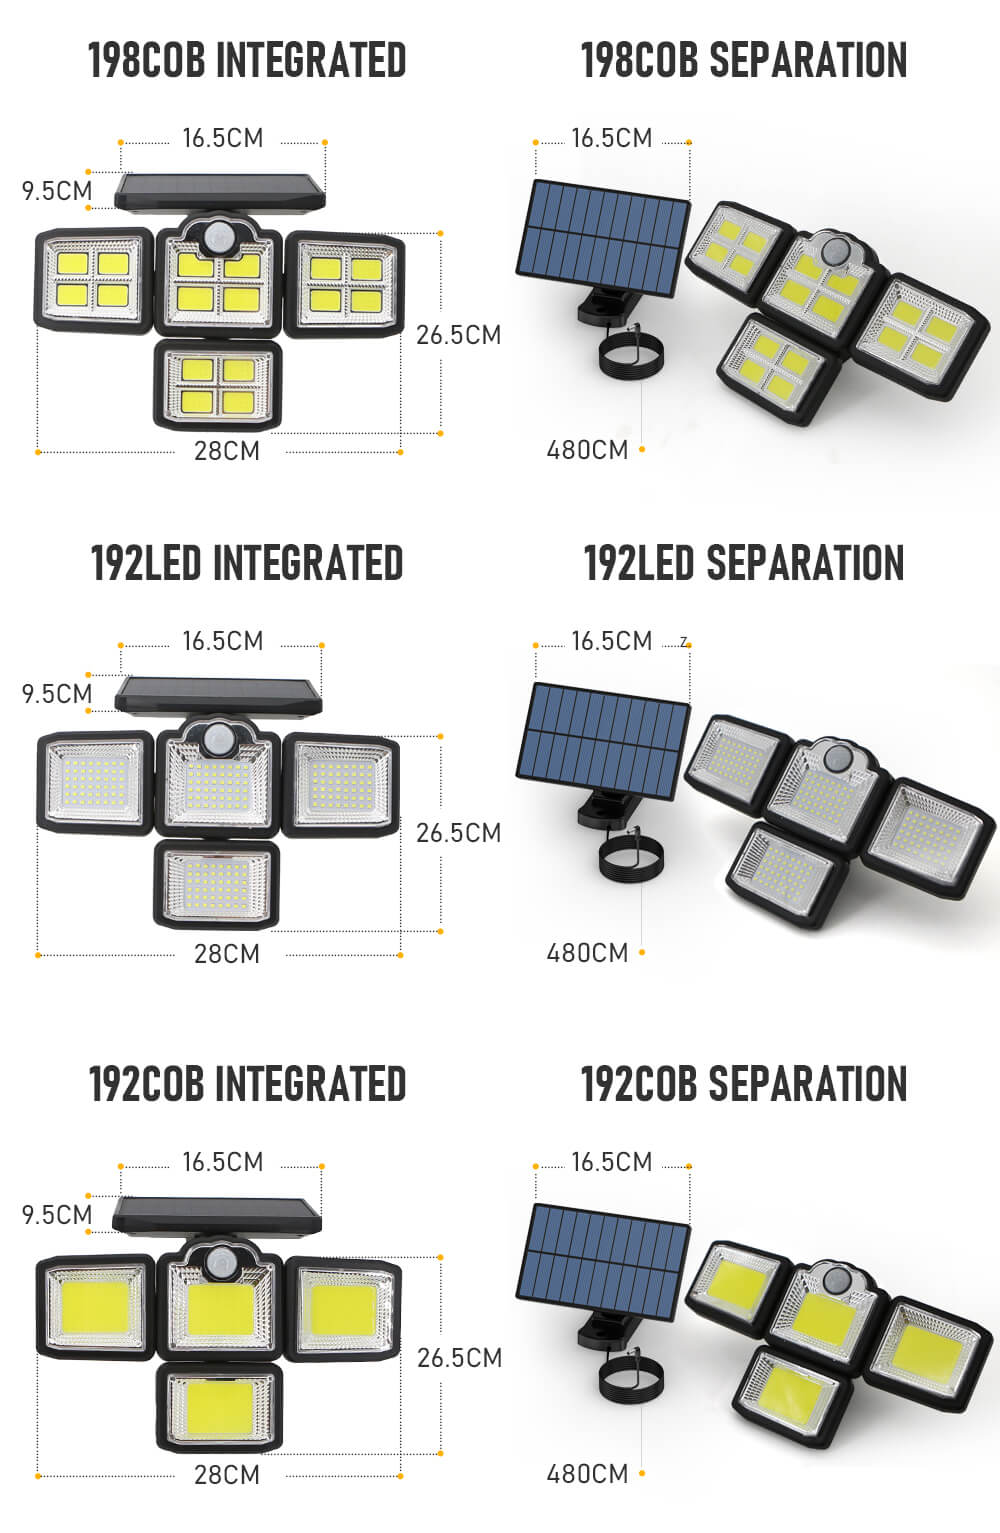 192198-LED-COB-Outdoor-Solar-Lights-4-Head-Motion-Sensor-270-Wide-Angle-Lighting-Waterproof-Remote-C-1924320-14